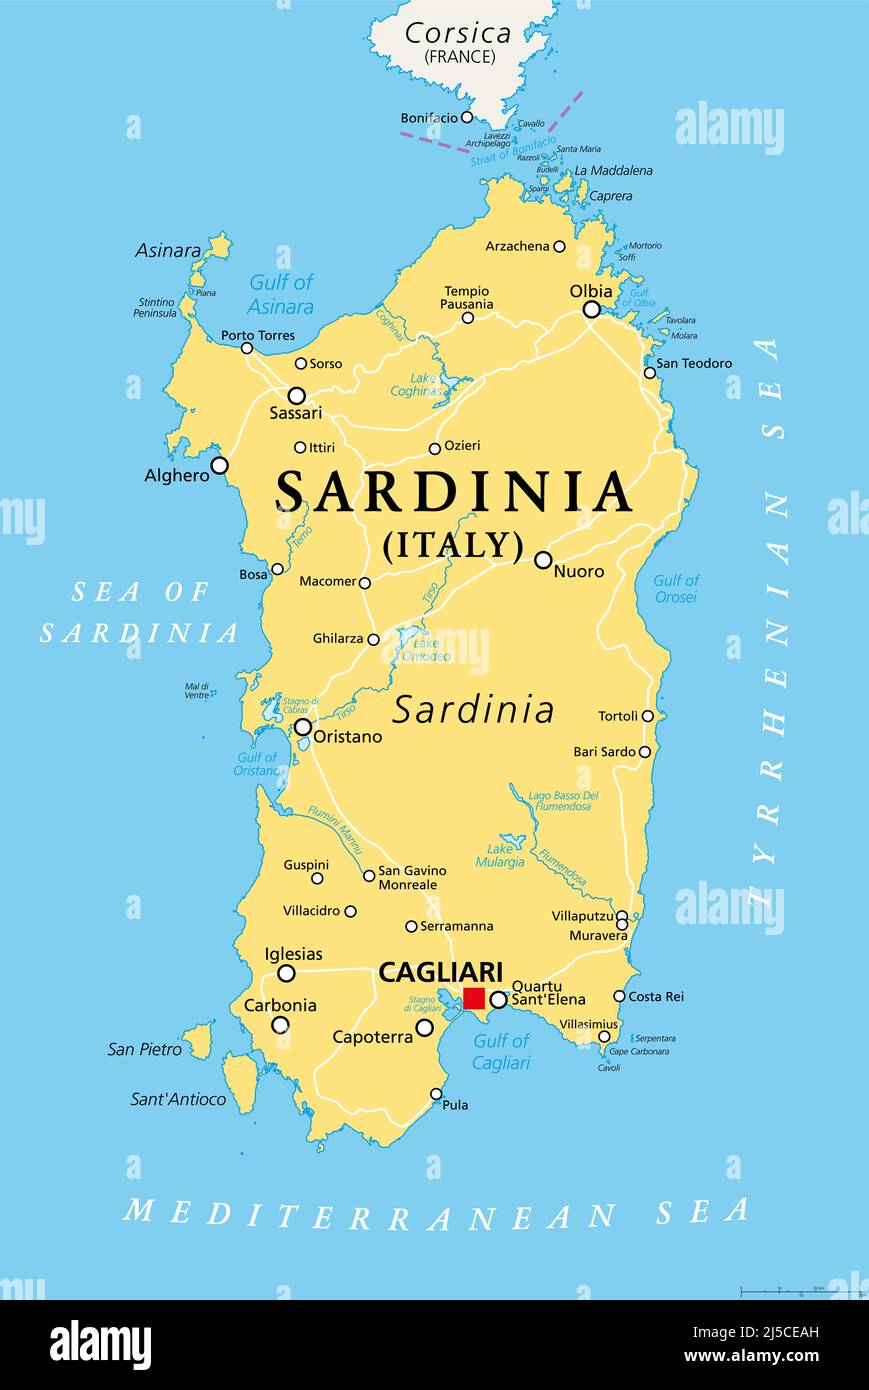 Sardinia, Italian island, political map with capital Cagliari. Sardegna, Autonomous Region of Sardinia, 2nd-largest island in the Mediterranean Sea. Stock Photo